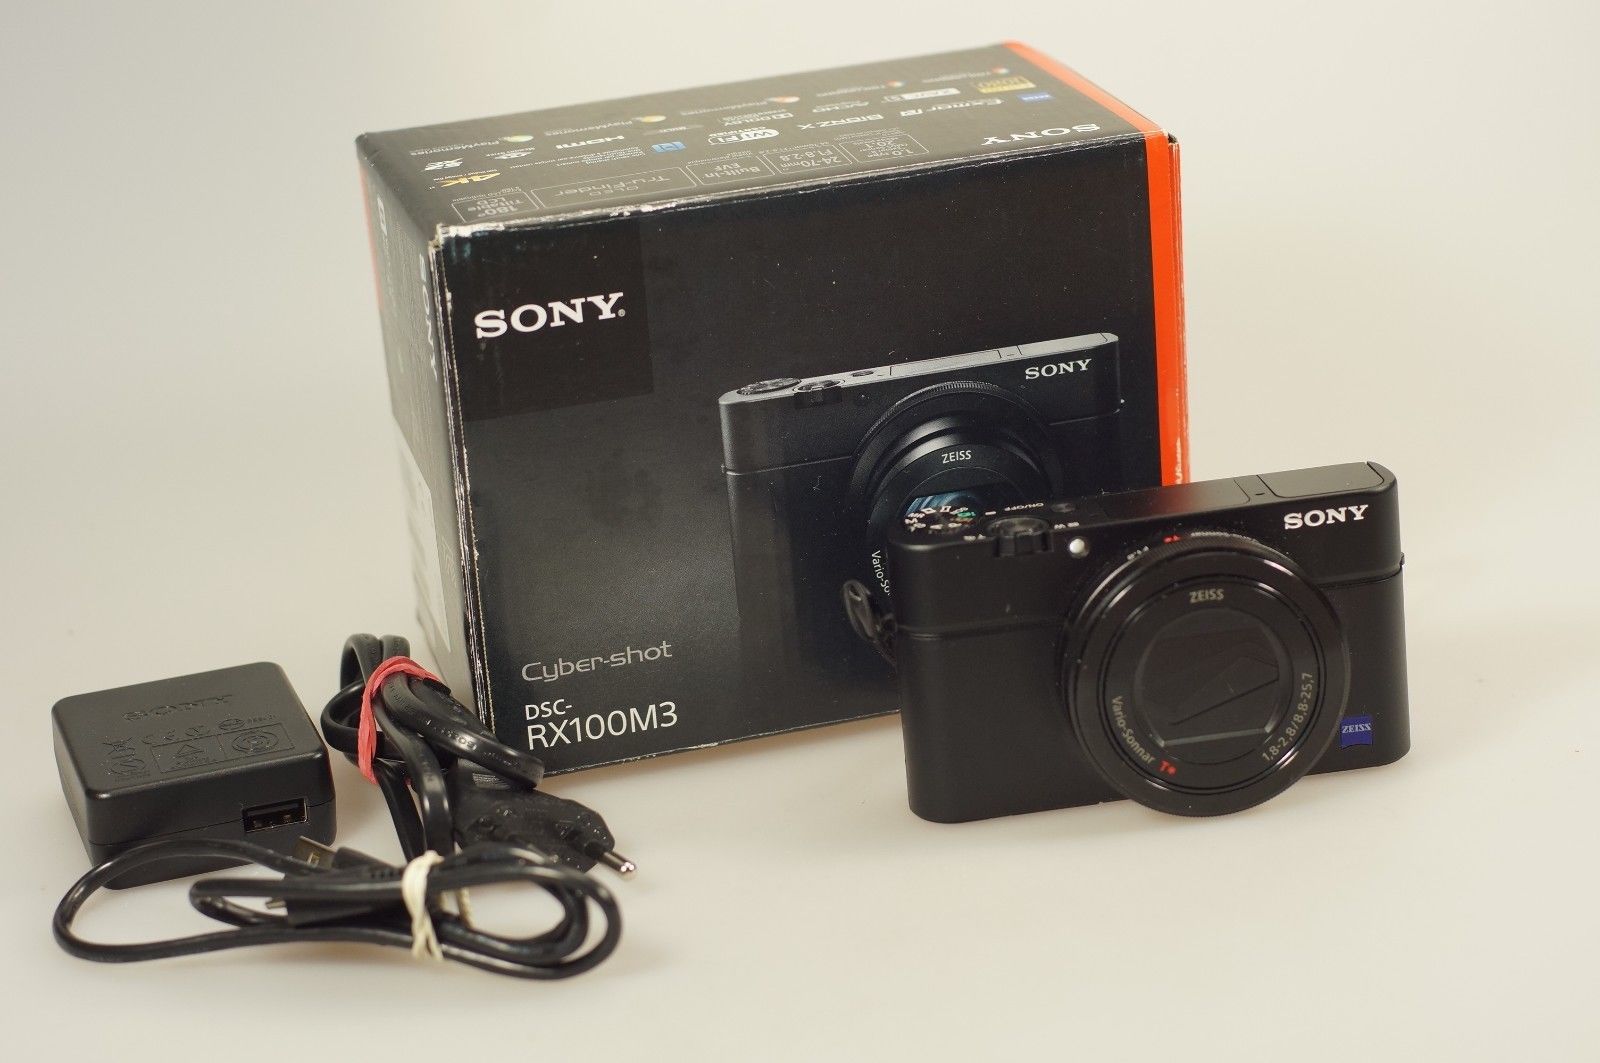 Sony DSC-RX100 III M3 Digitalkamera , gebraucht in OVP